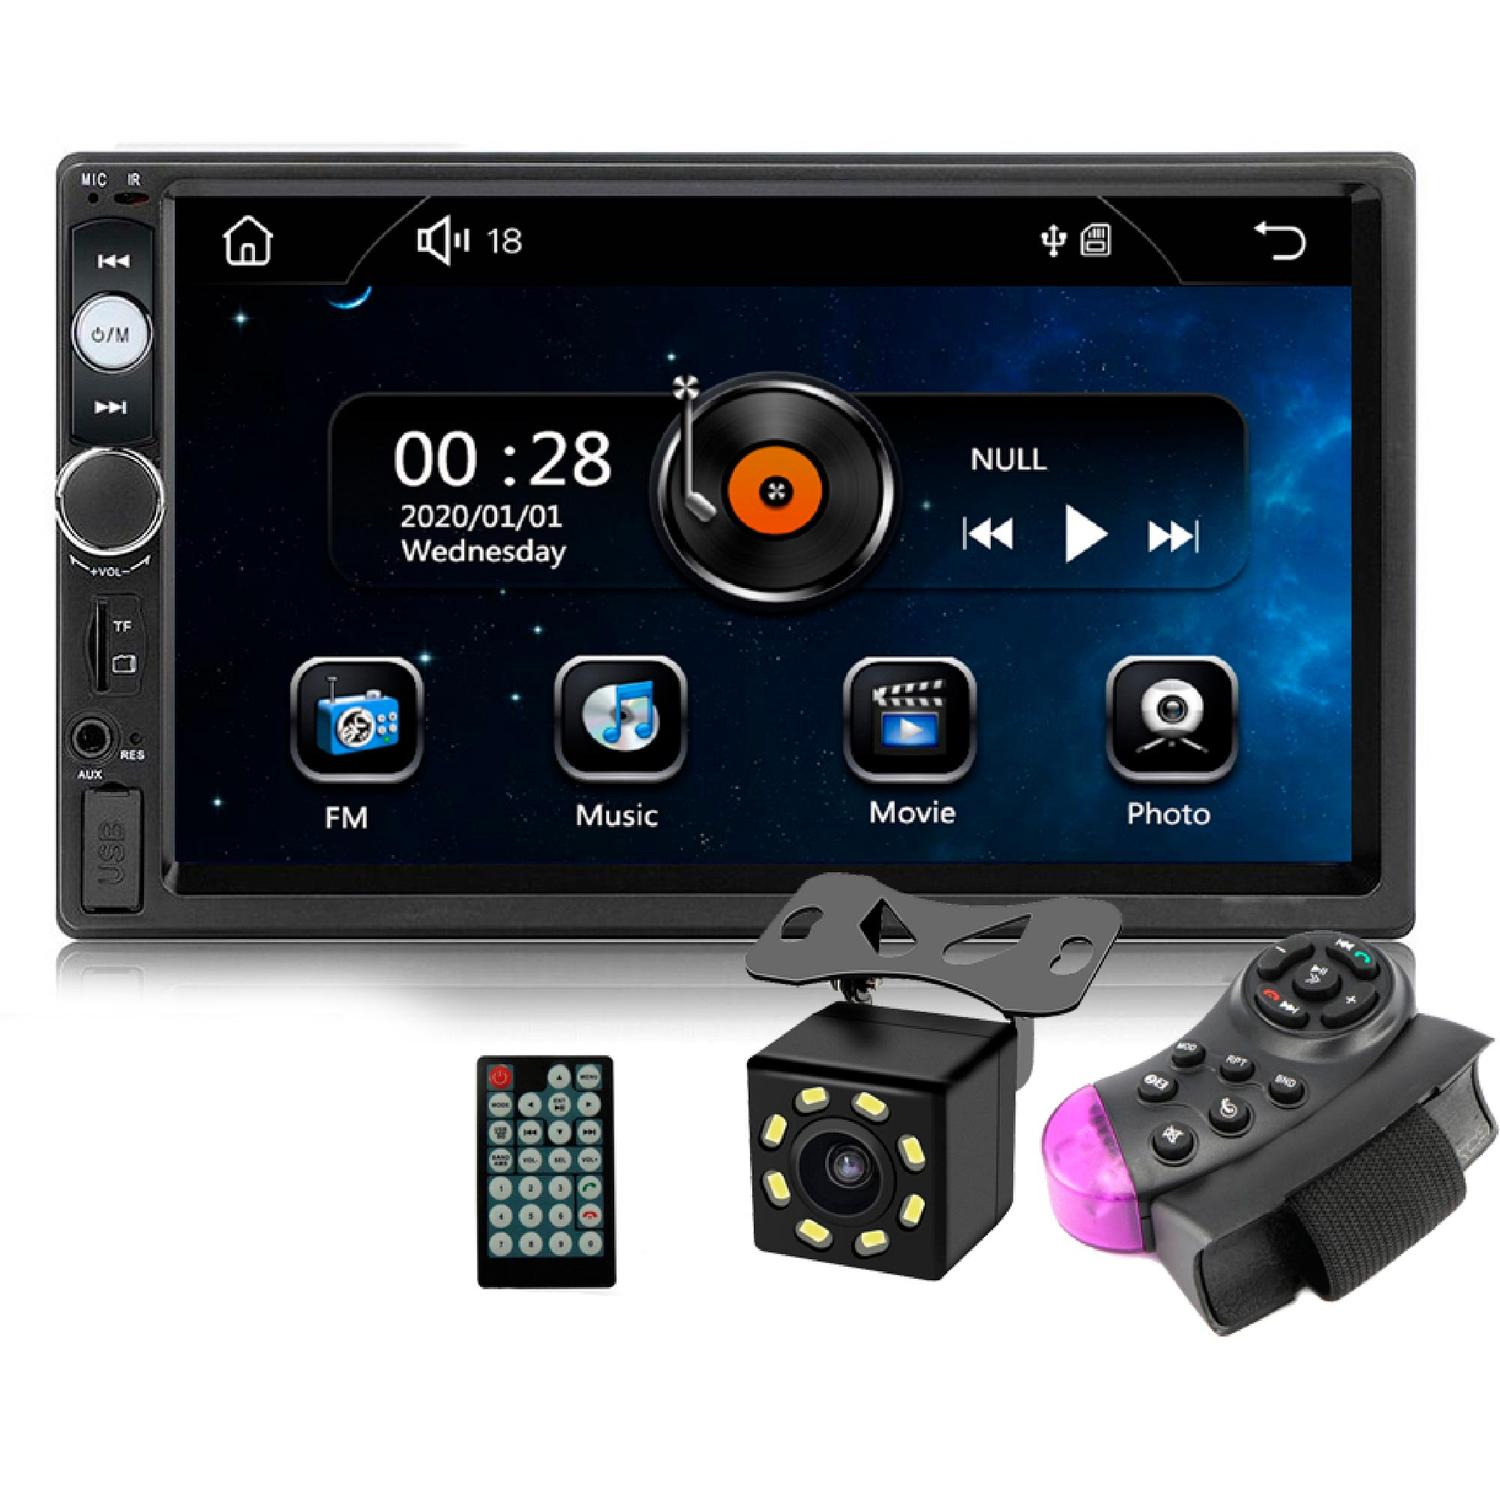 Autoestereo Vak 6911 Camara Touch 7 Mirrorlink Bluetooth Usb MP5 Video